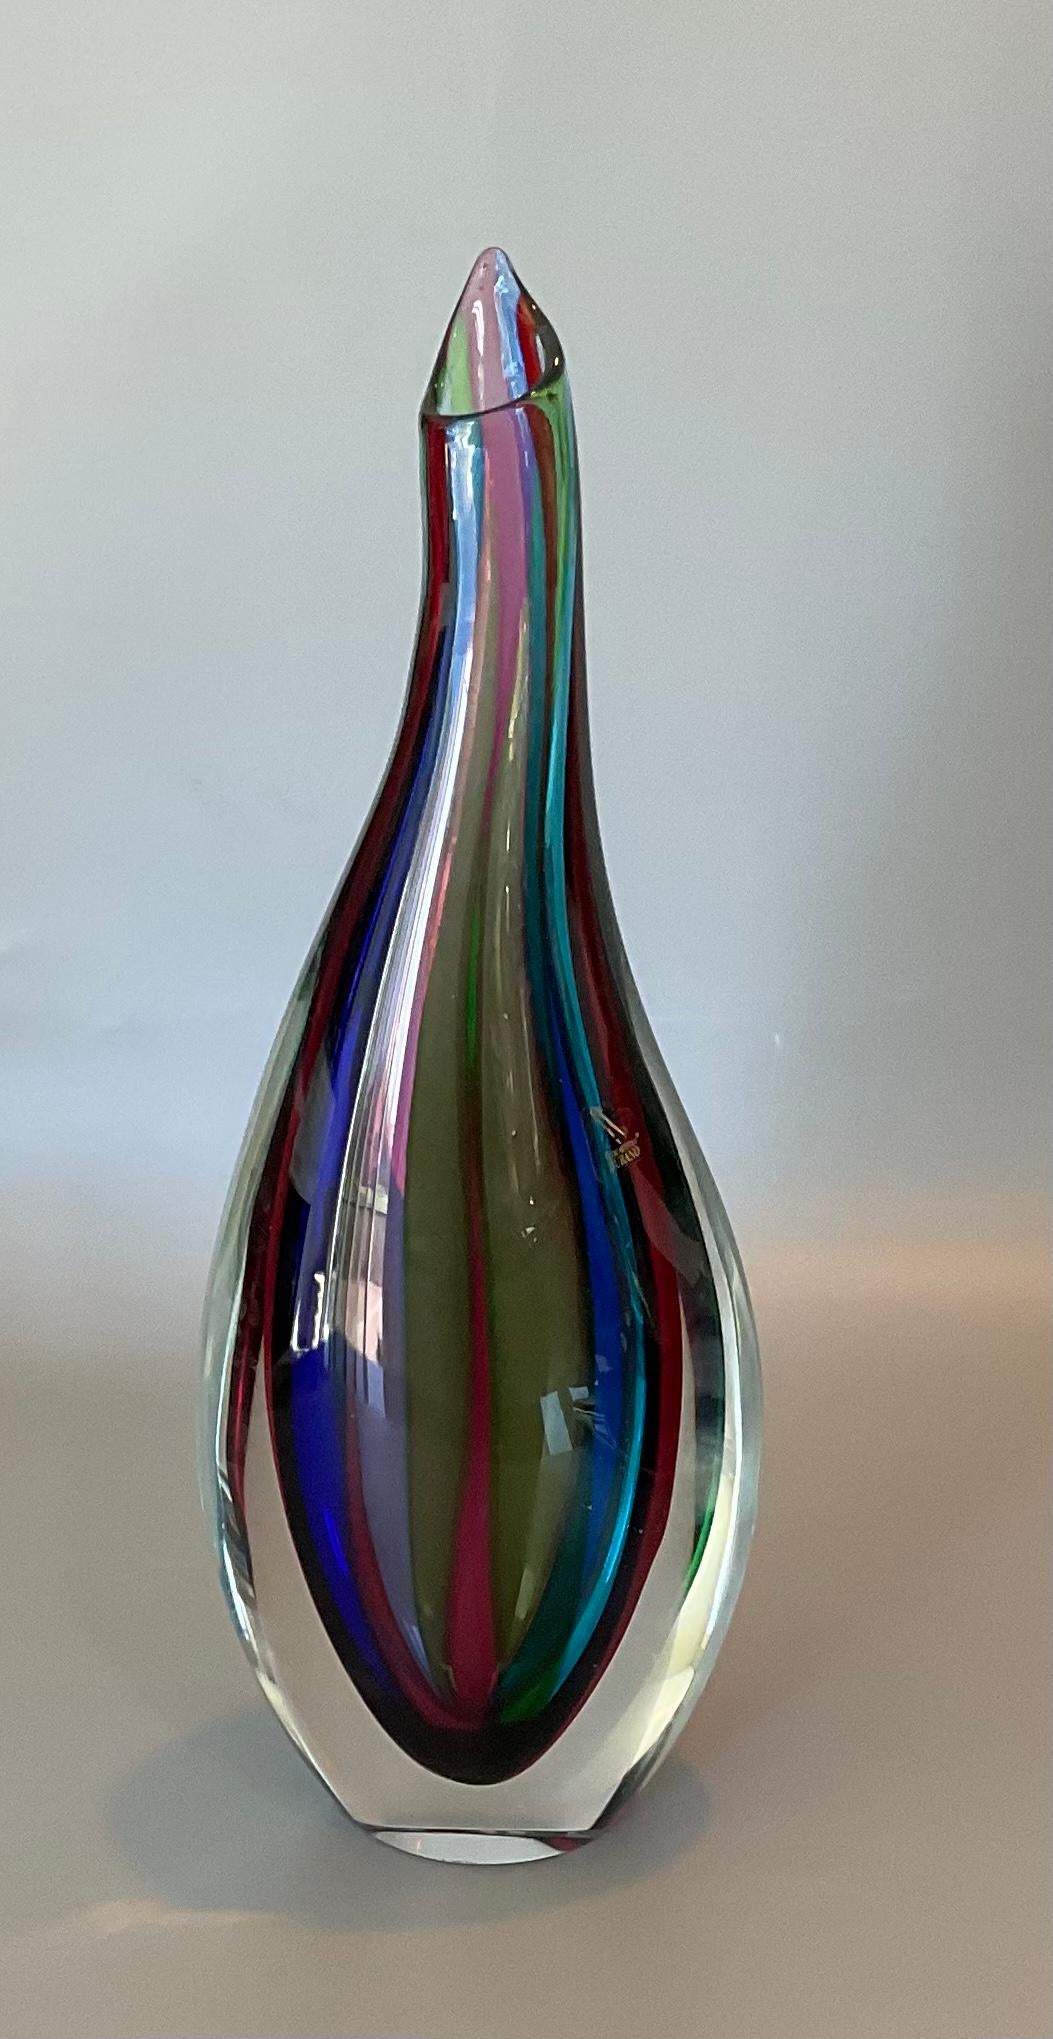 Blown Glass Giuliani Mian Murano Art Glass Vase Striped Multi Color Signed by the Artist For Sale